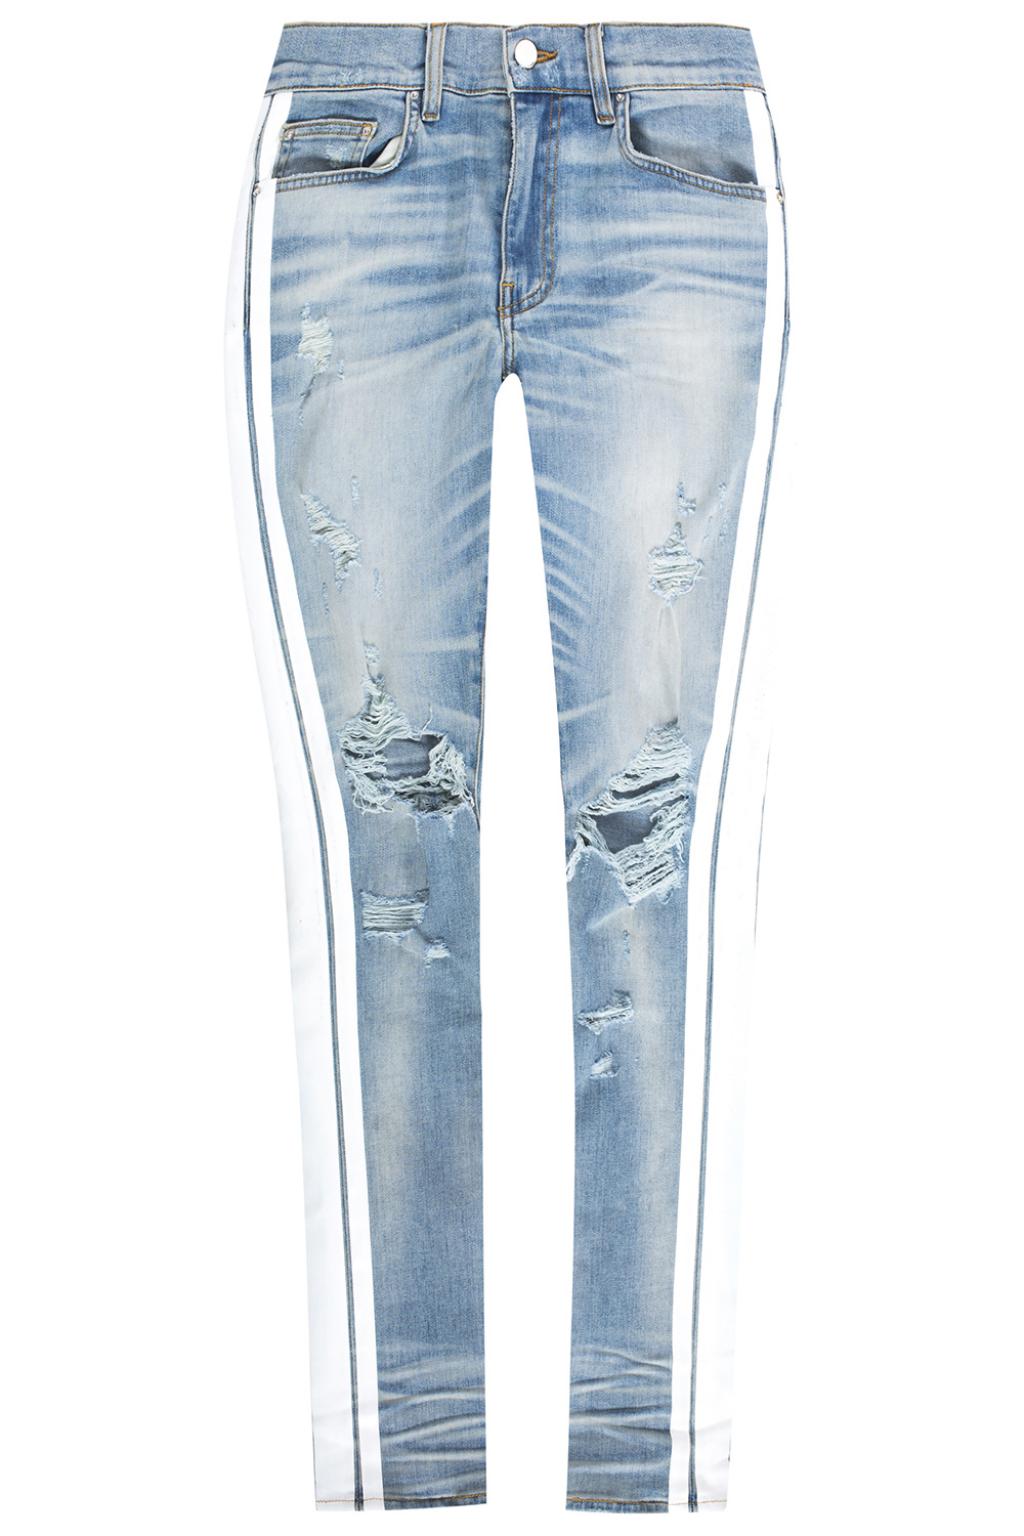 amiri striped jeans